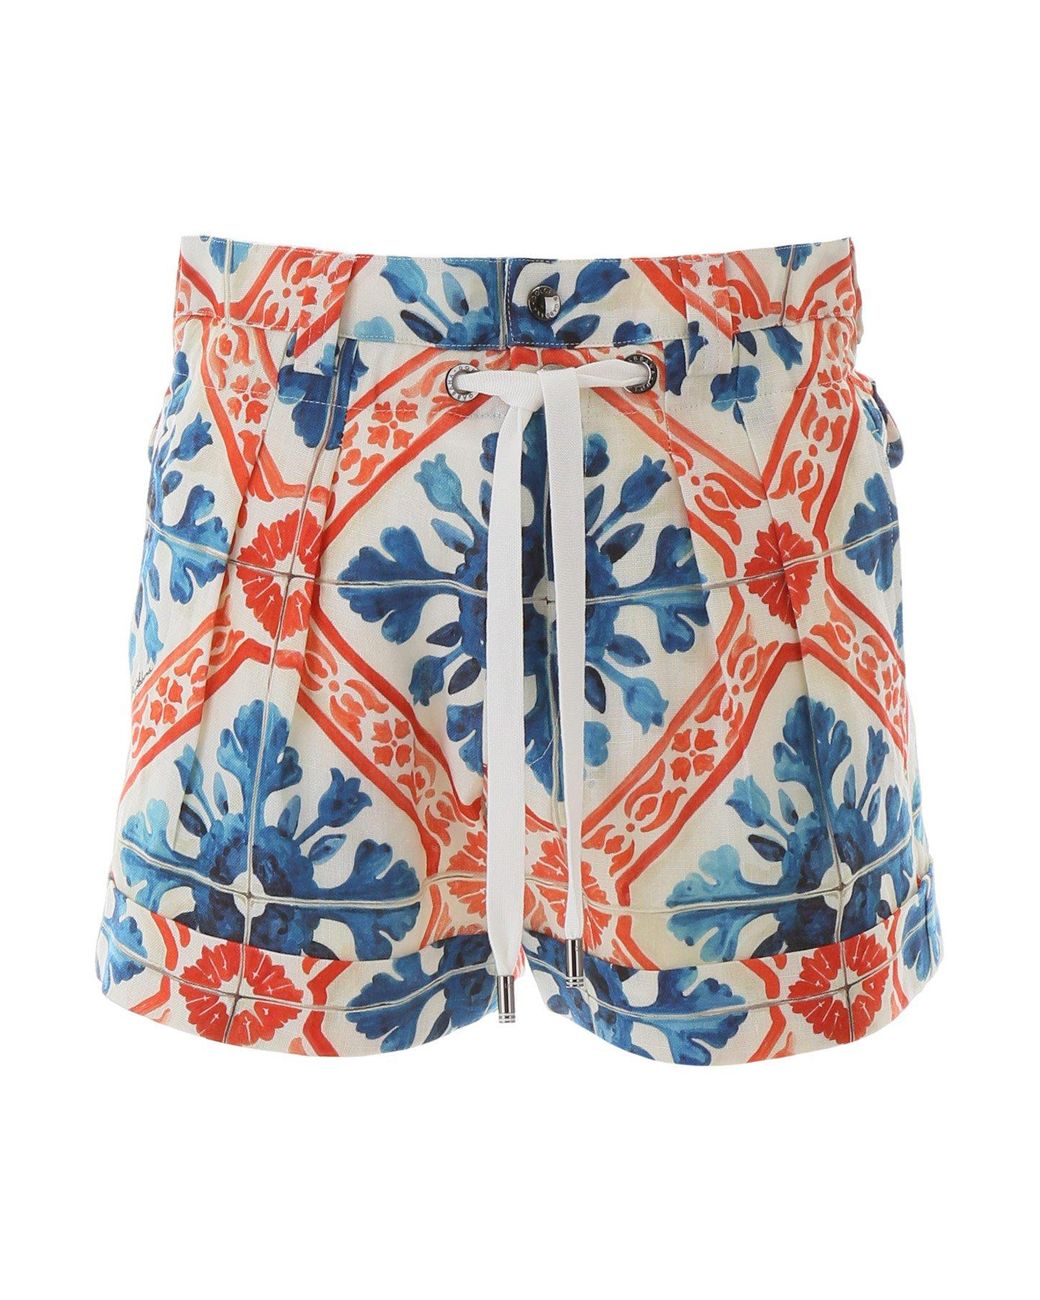 Dolce & Gabbana Linen Printed Drawstring Shorts in Blue for Men - Save